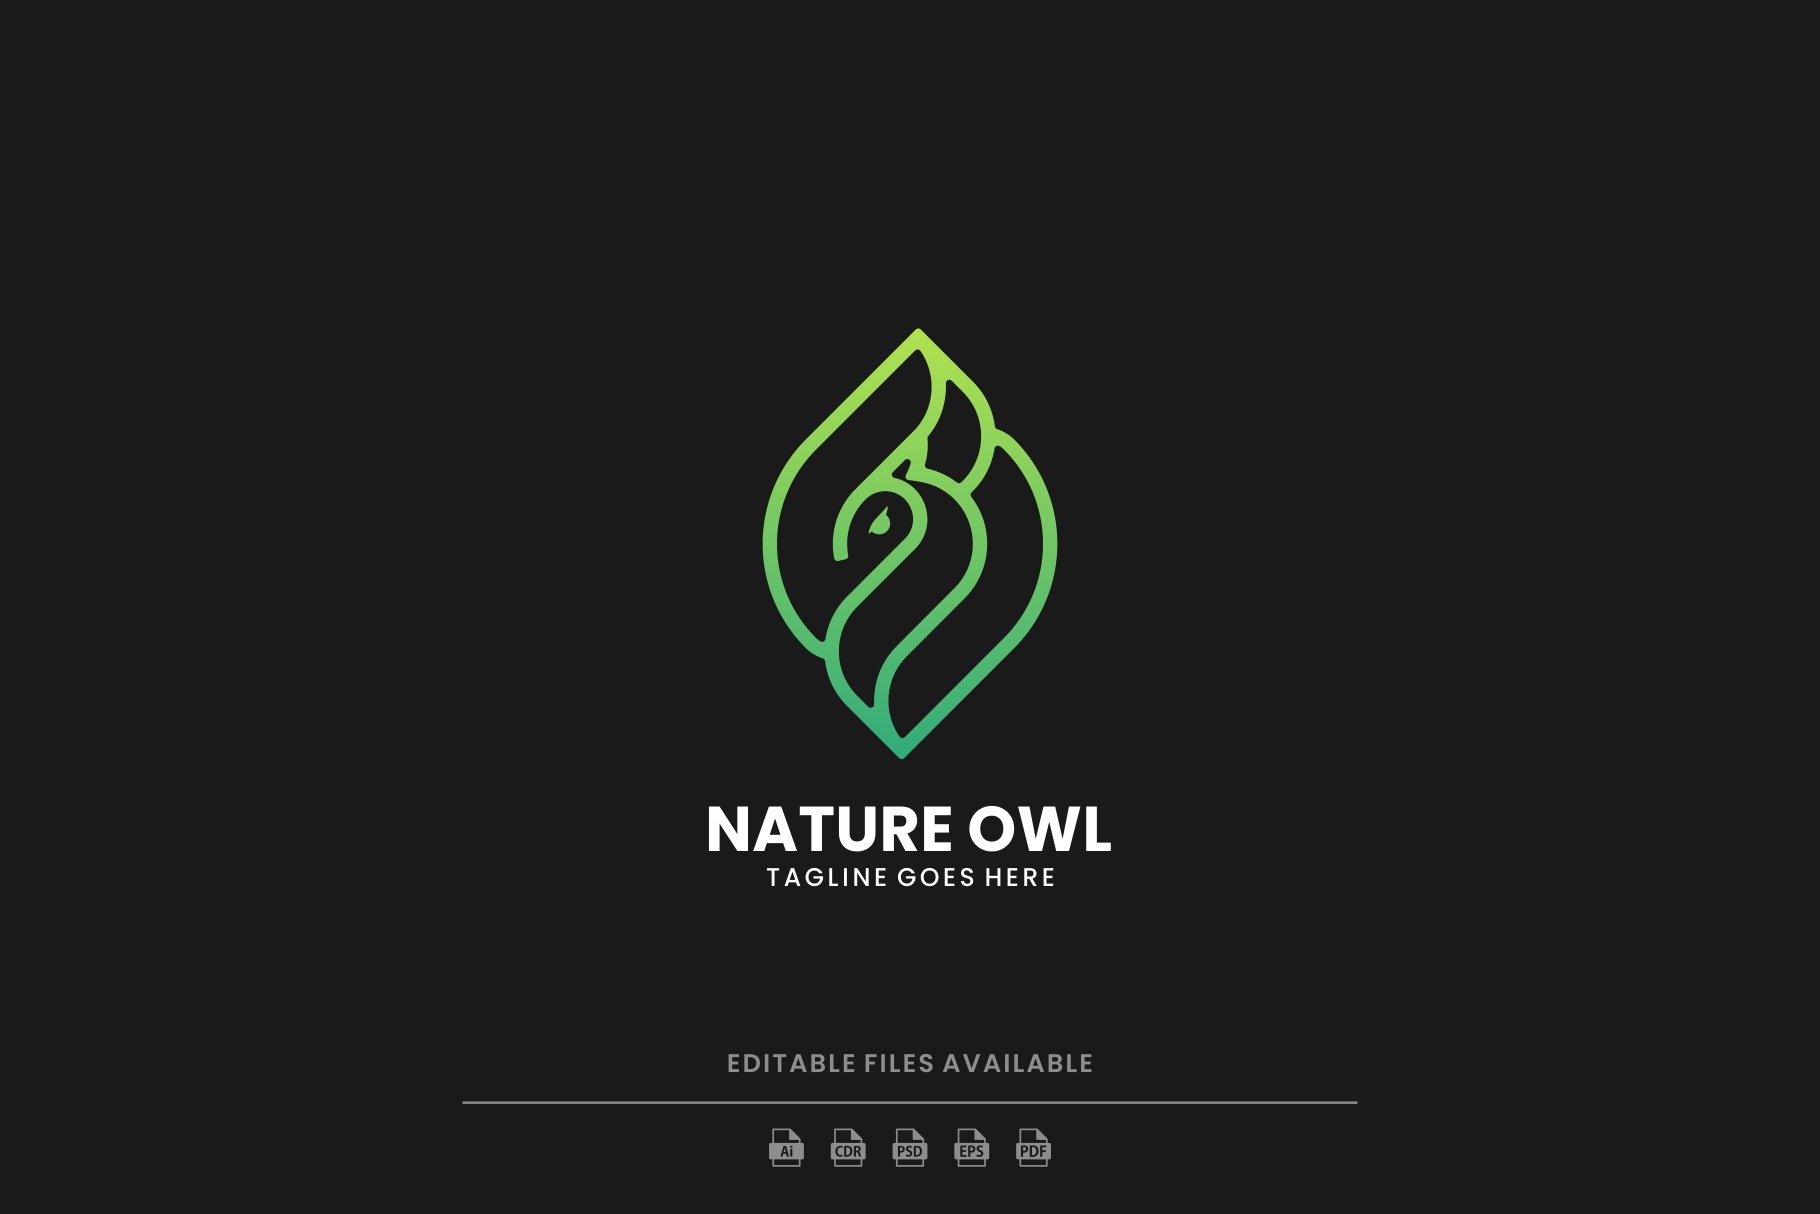 Nature Owl Line Art Logo cover image.